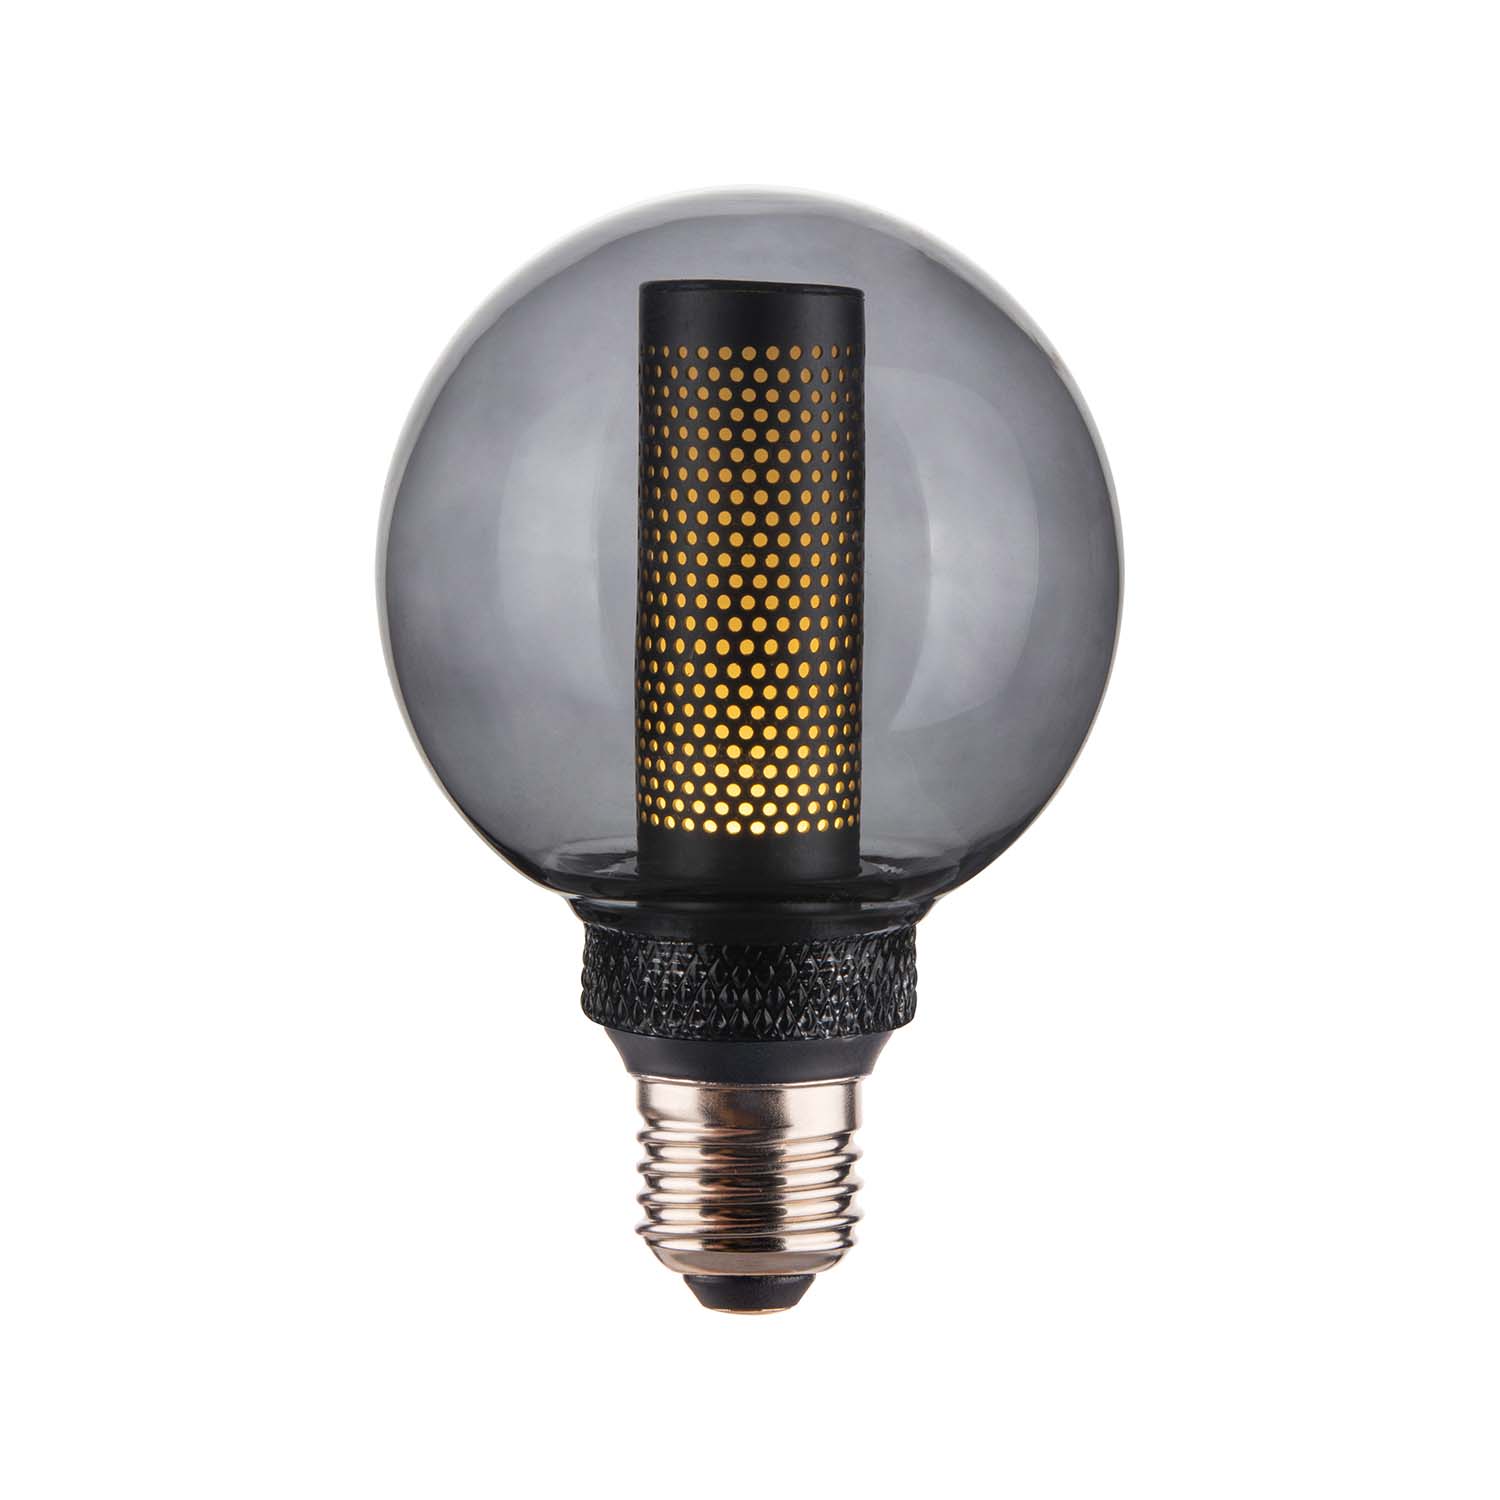 Core - E27 LED bulb with perforated tube